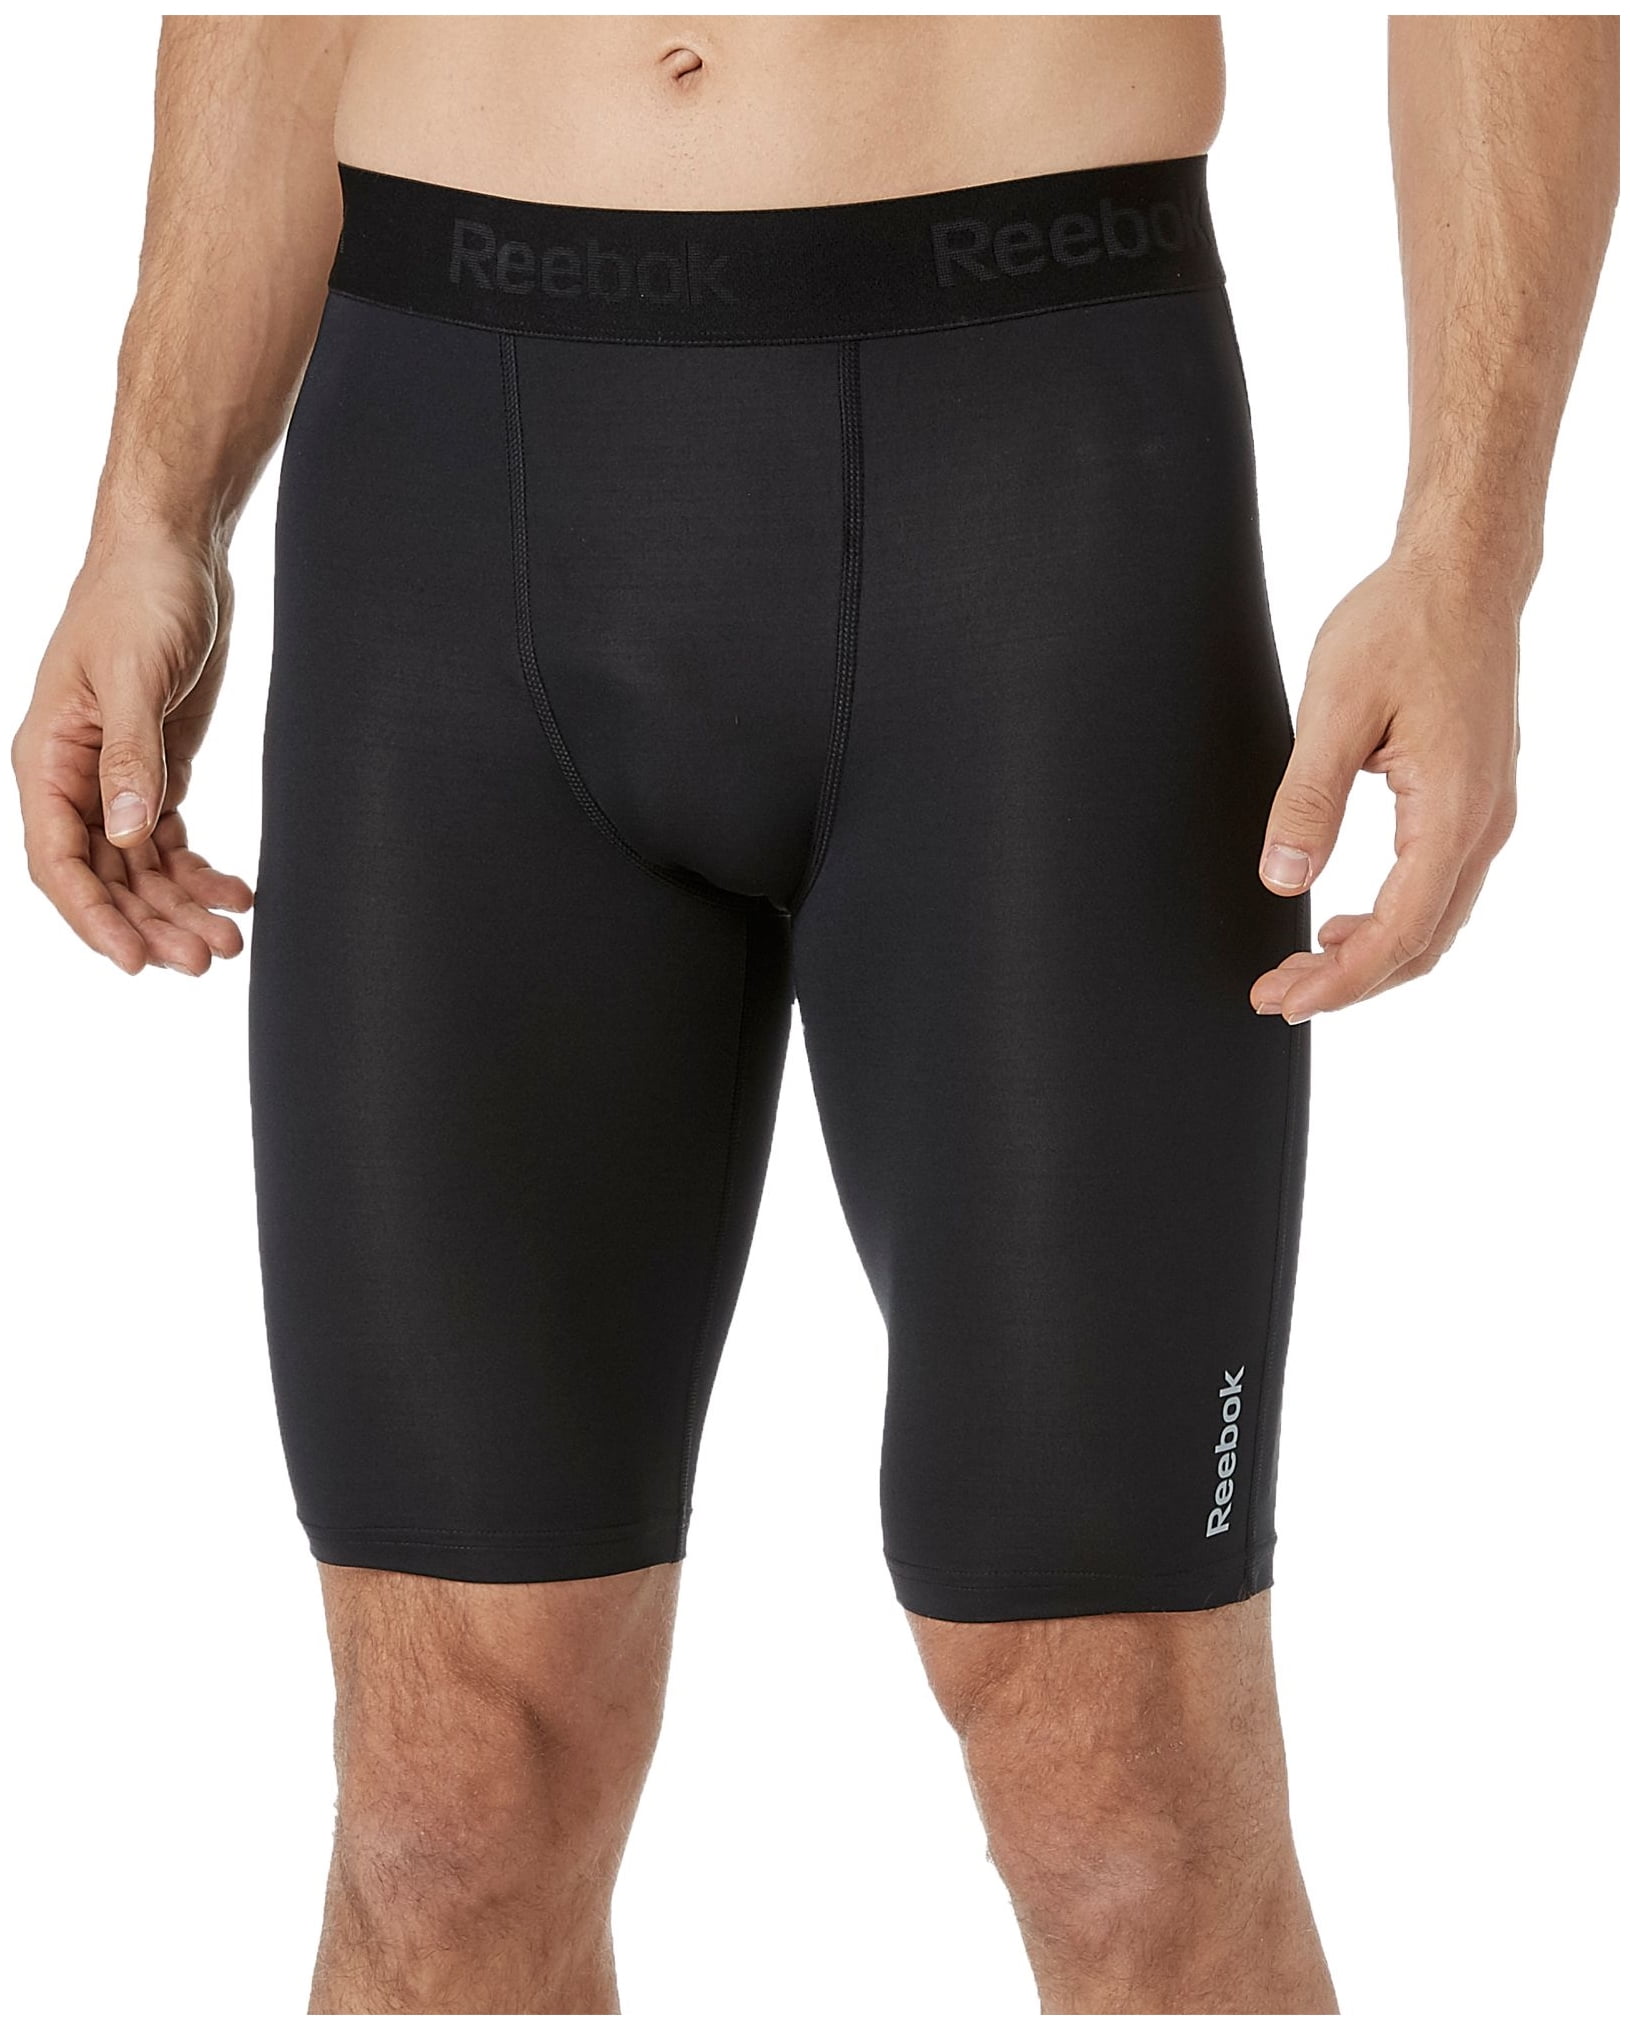 reebok spandex shorts sale